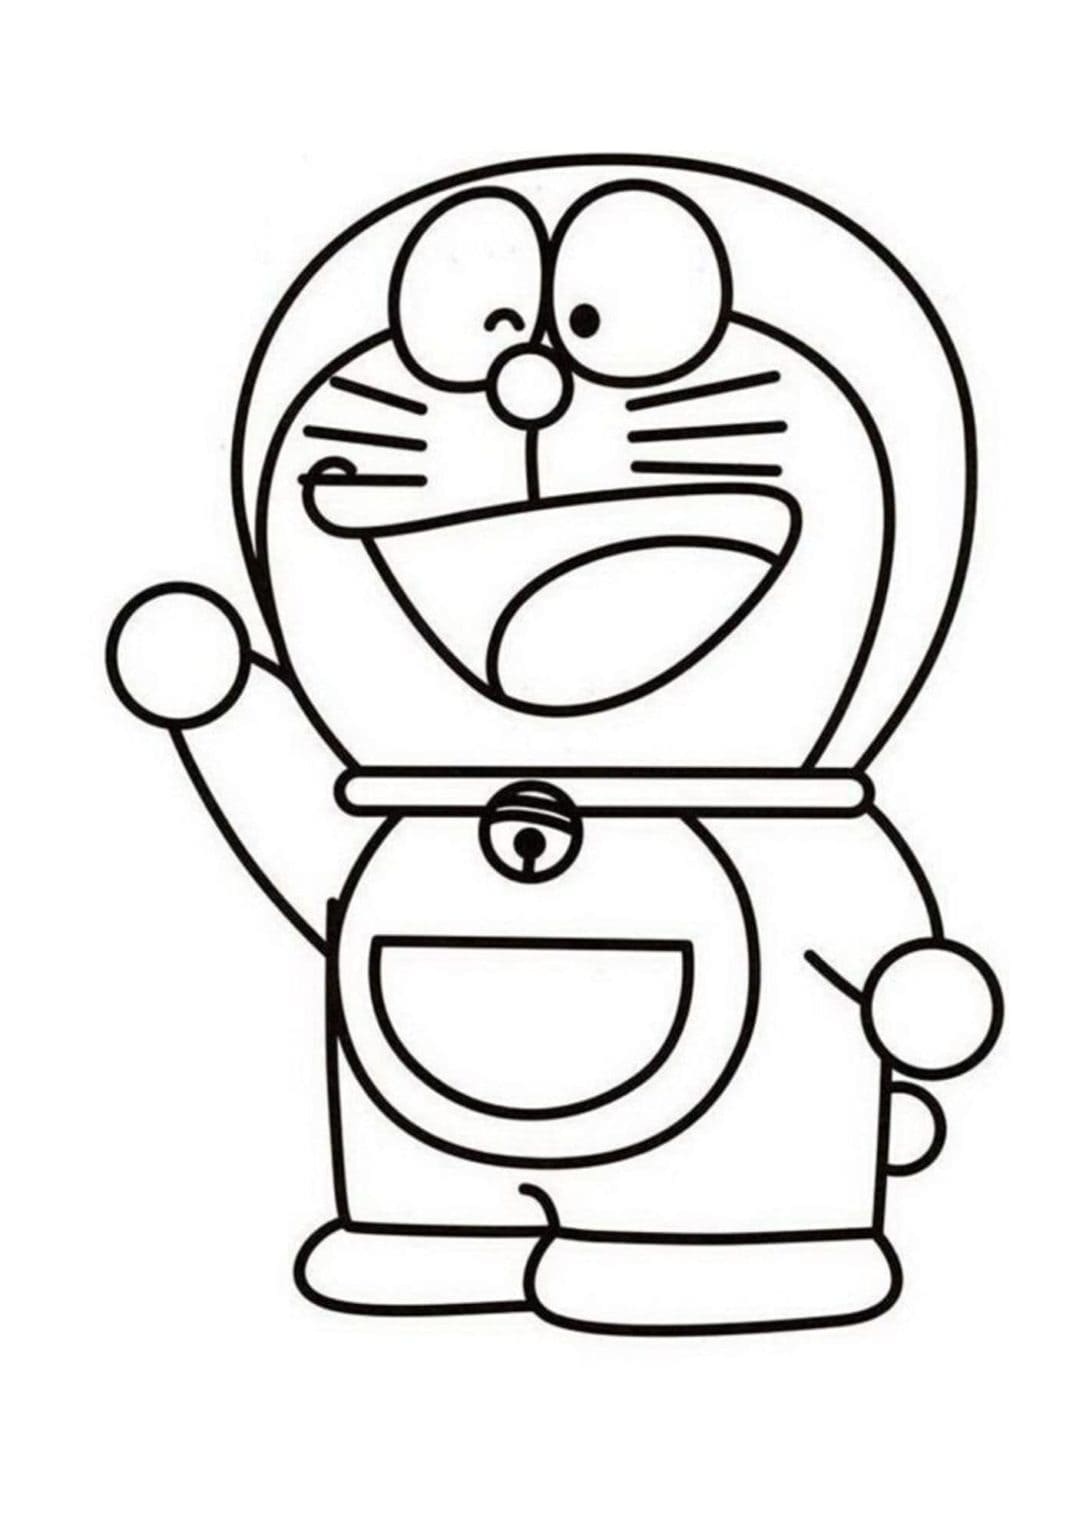 Doraemon-Ausmalbilder-ausmalbilderkinder.de-26